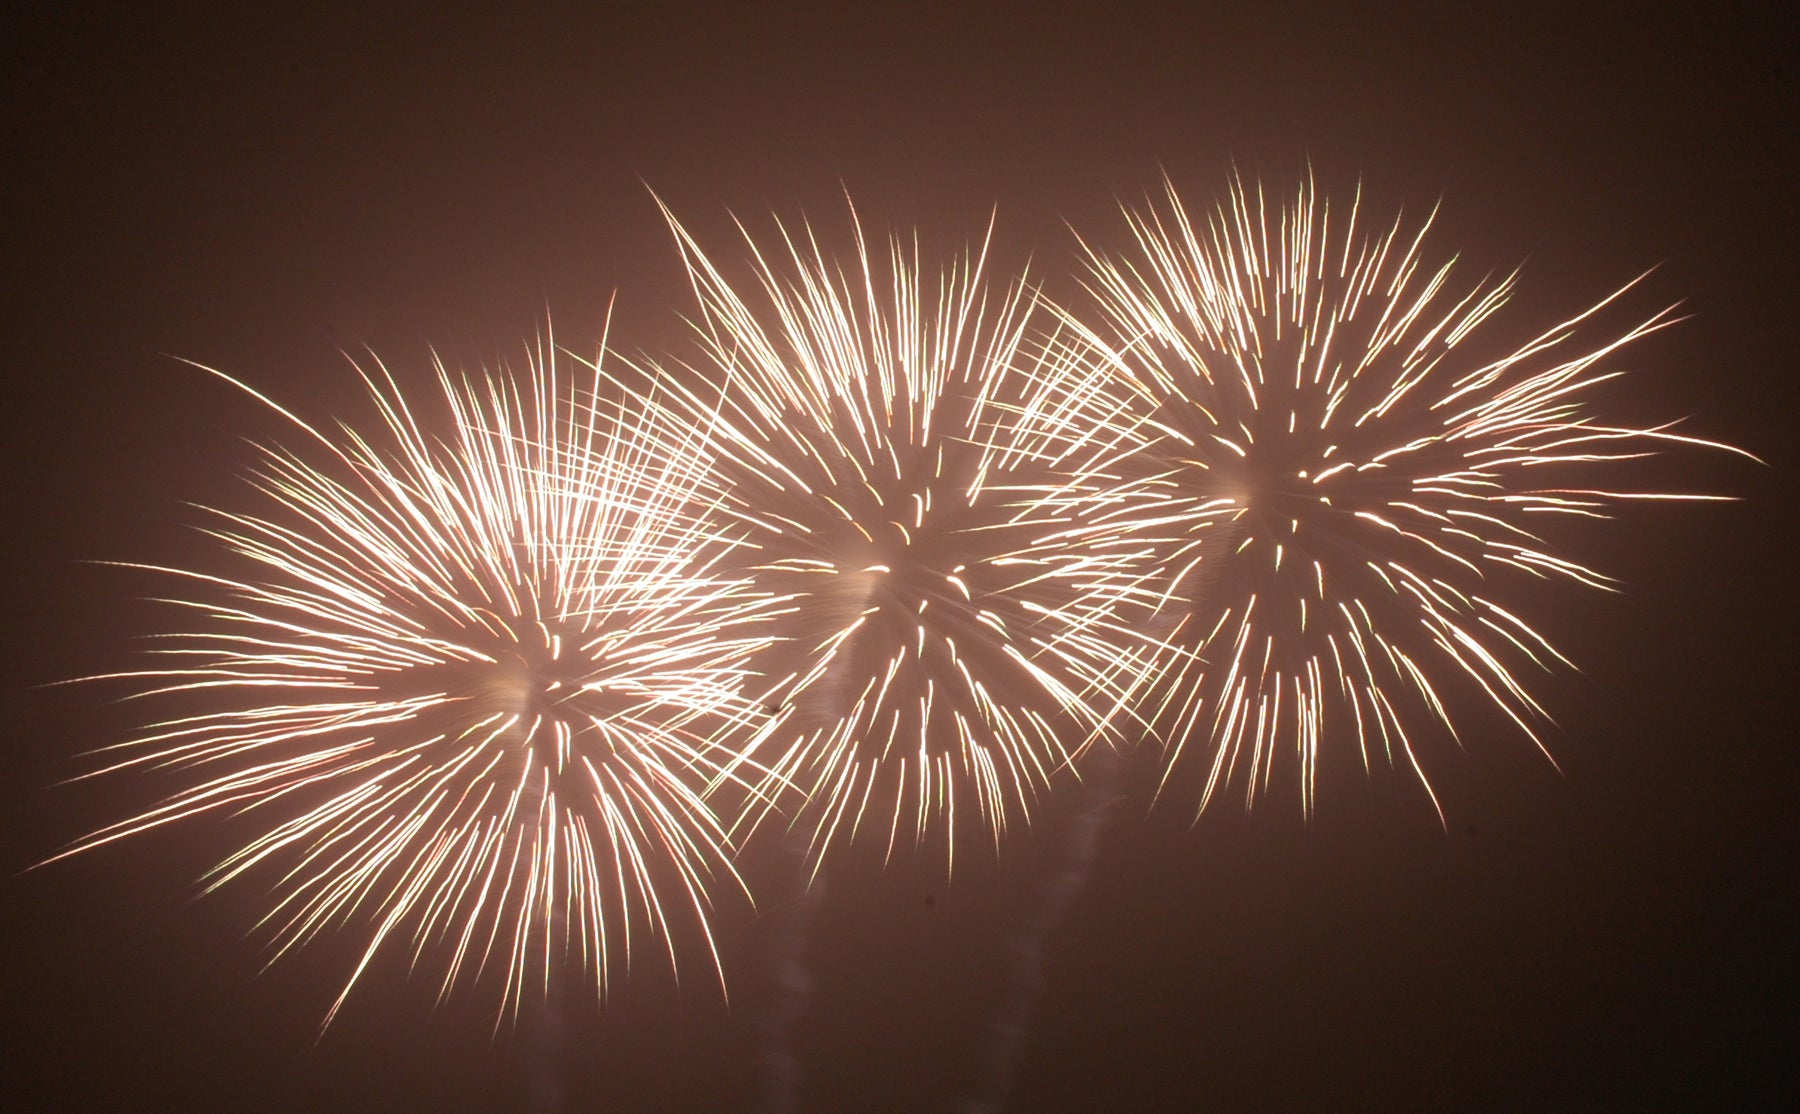 The 21st Macau International Fireworks Displays Contest